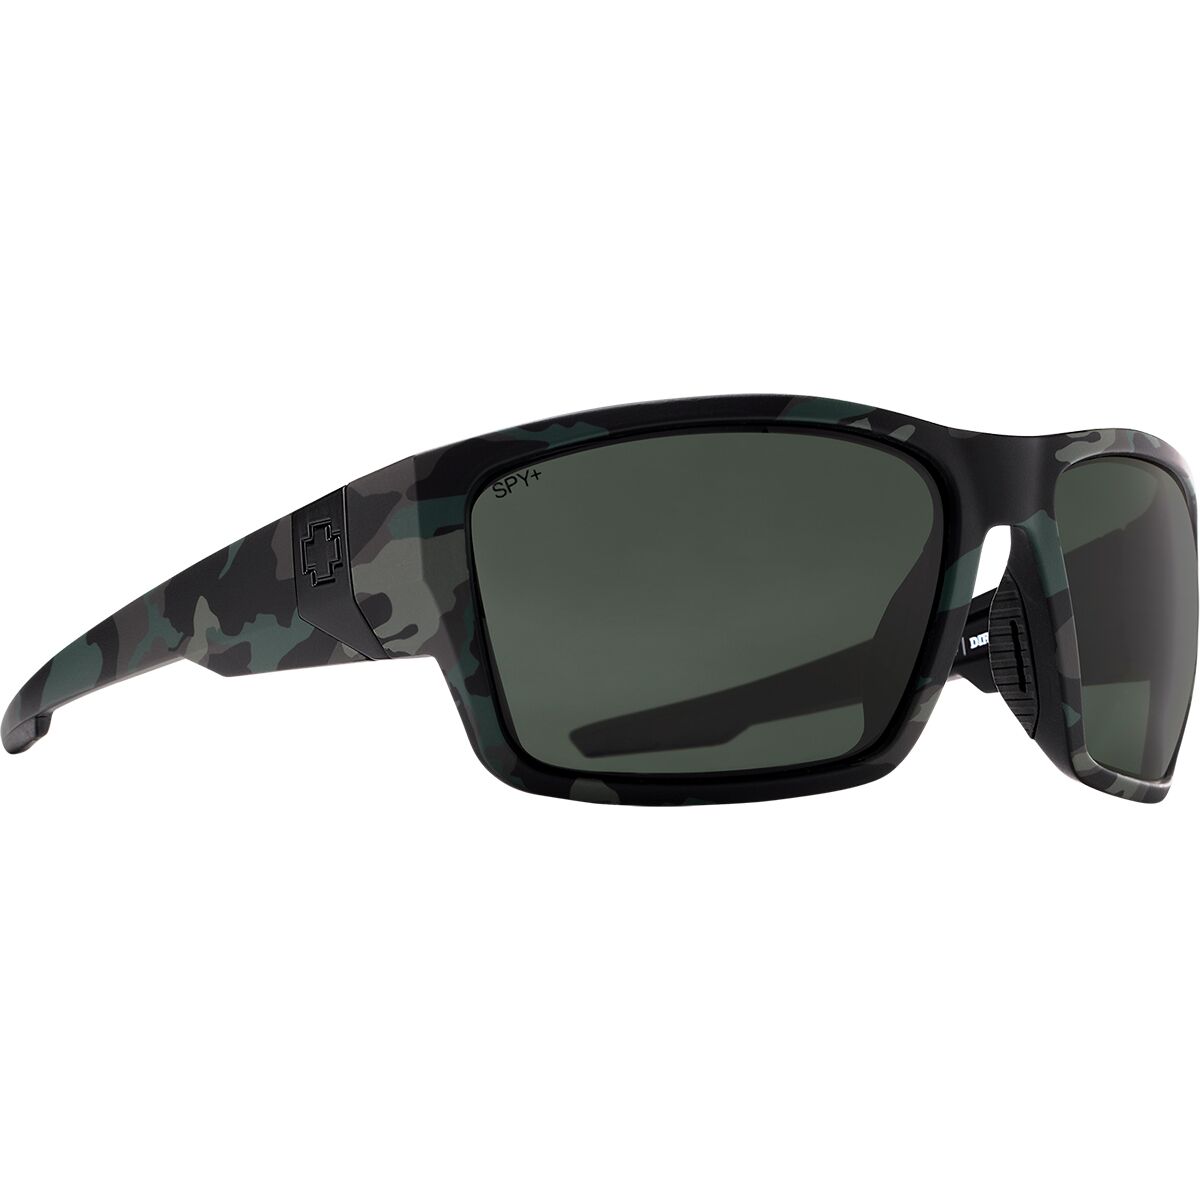 Spy Dirty Mo Tech Polarized Sunglasses